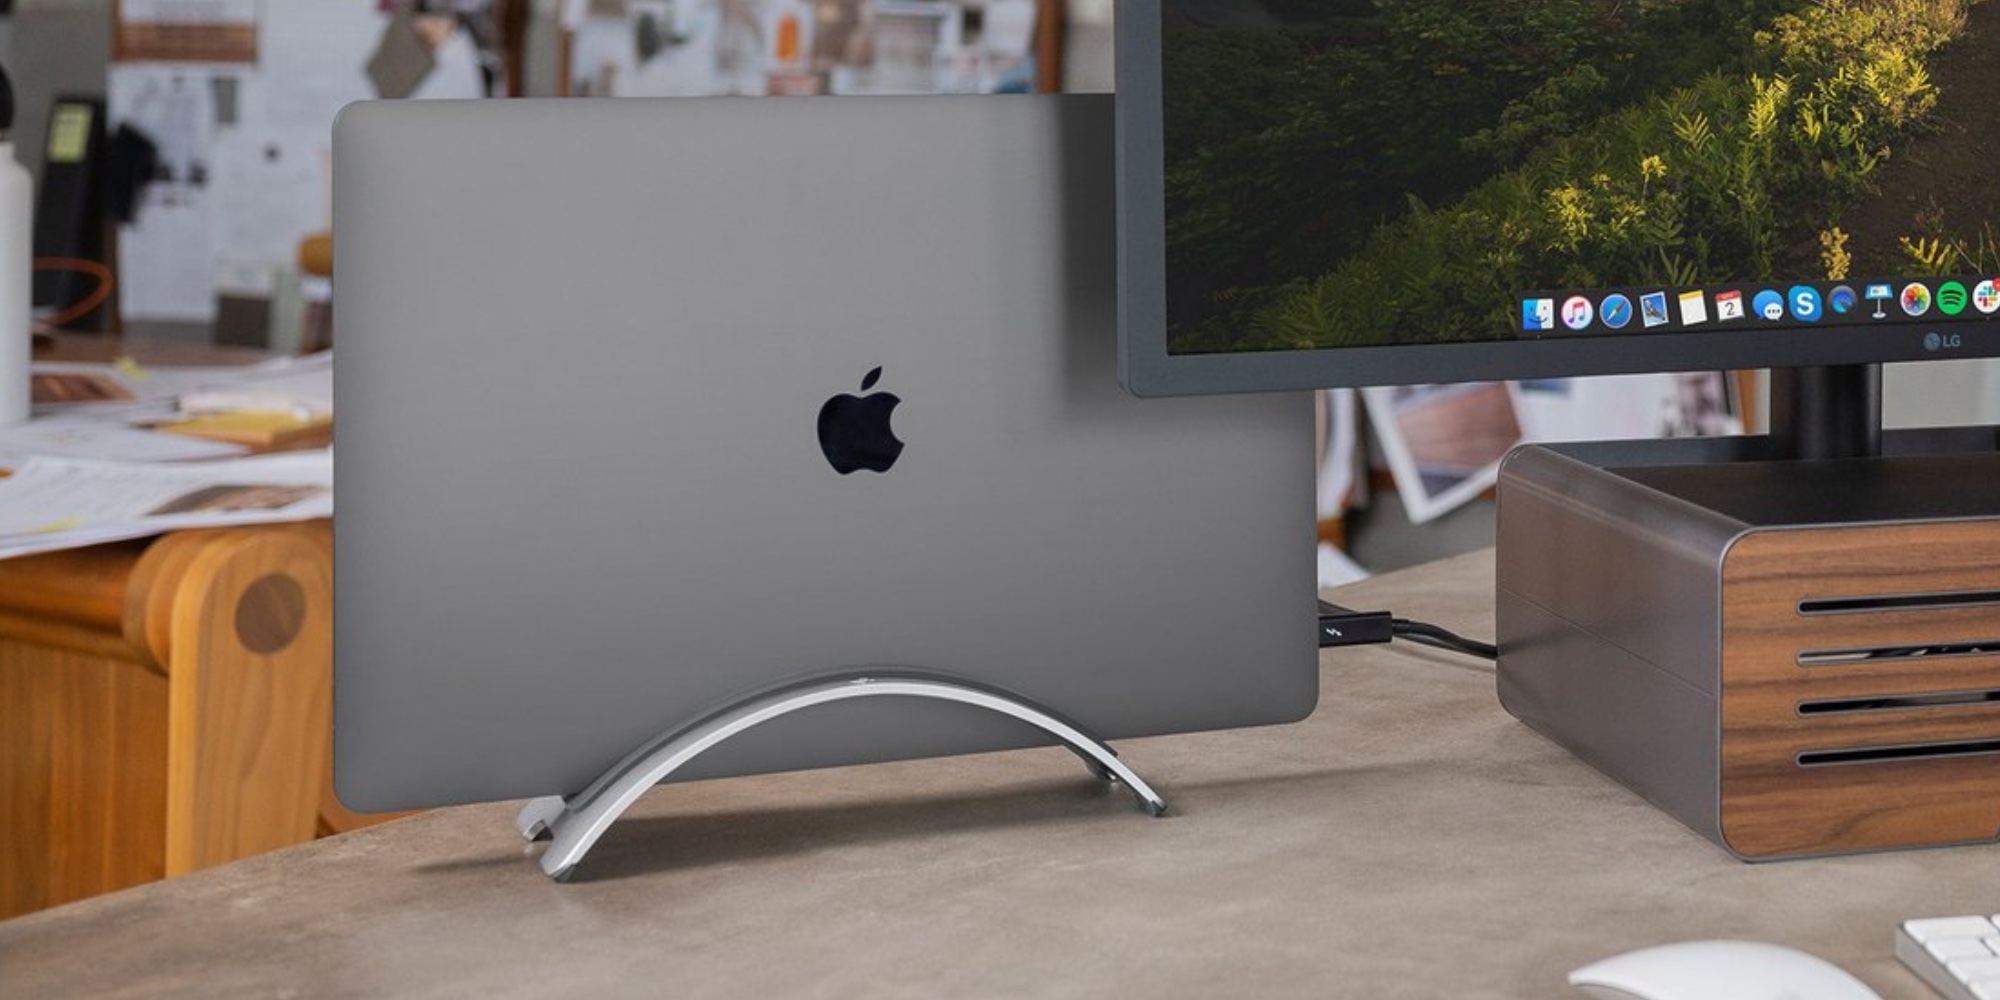 Dock your MacBook in Twelve South's aluminum BookArc at $43.50 (Save 27%)